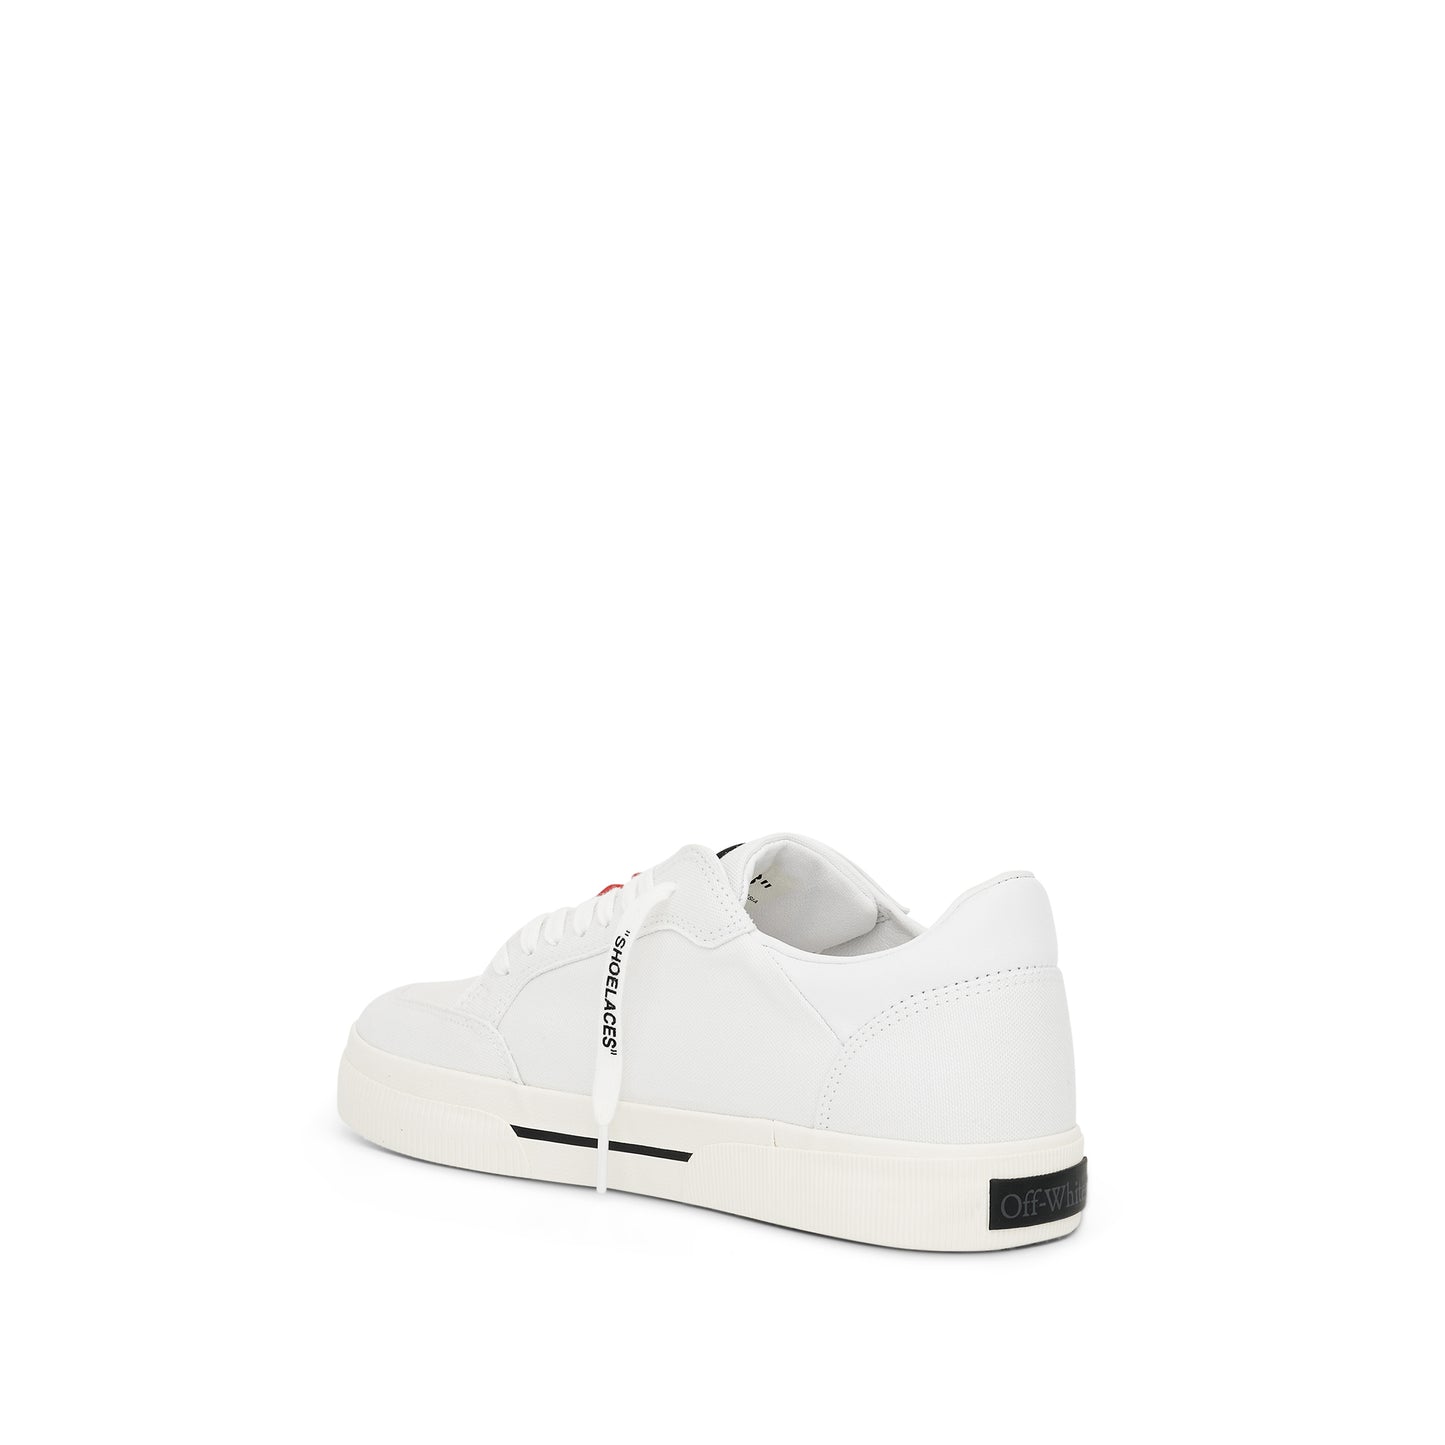 New Low Vulcanized Canvas Sneaker in White/Black